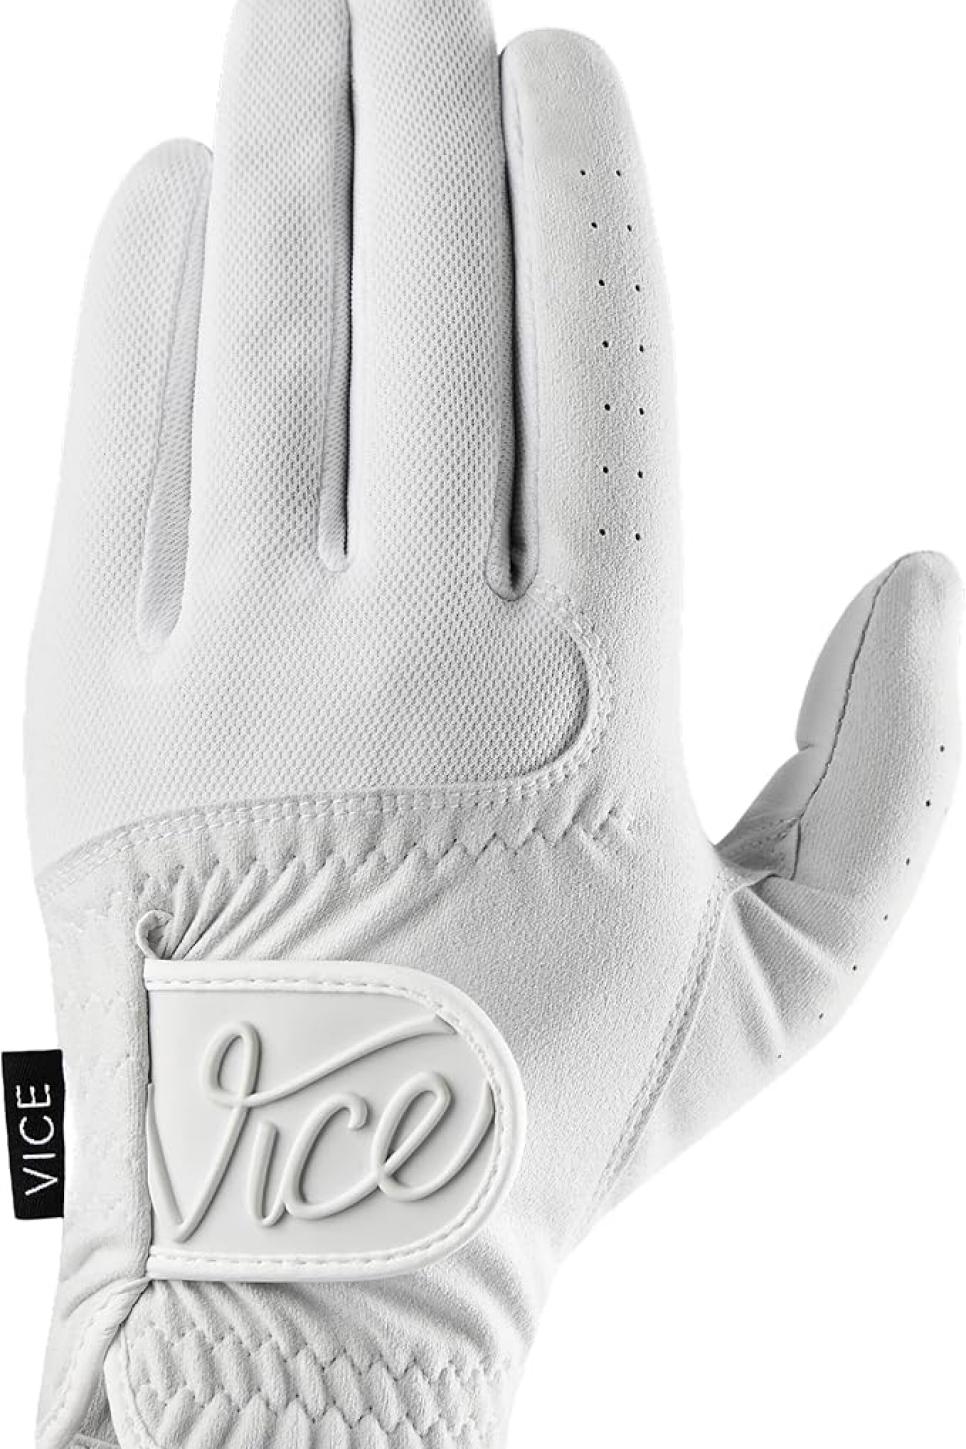 VICE Golf Duro White Golf Glove